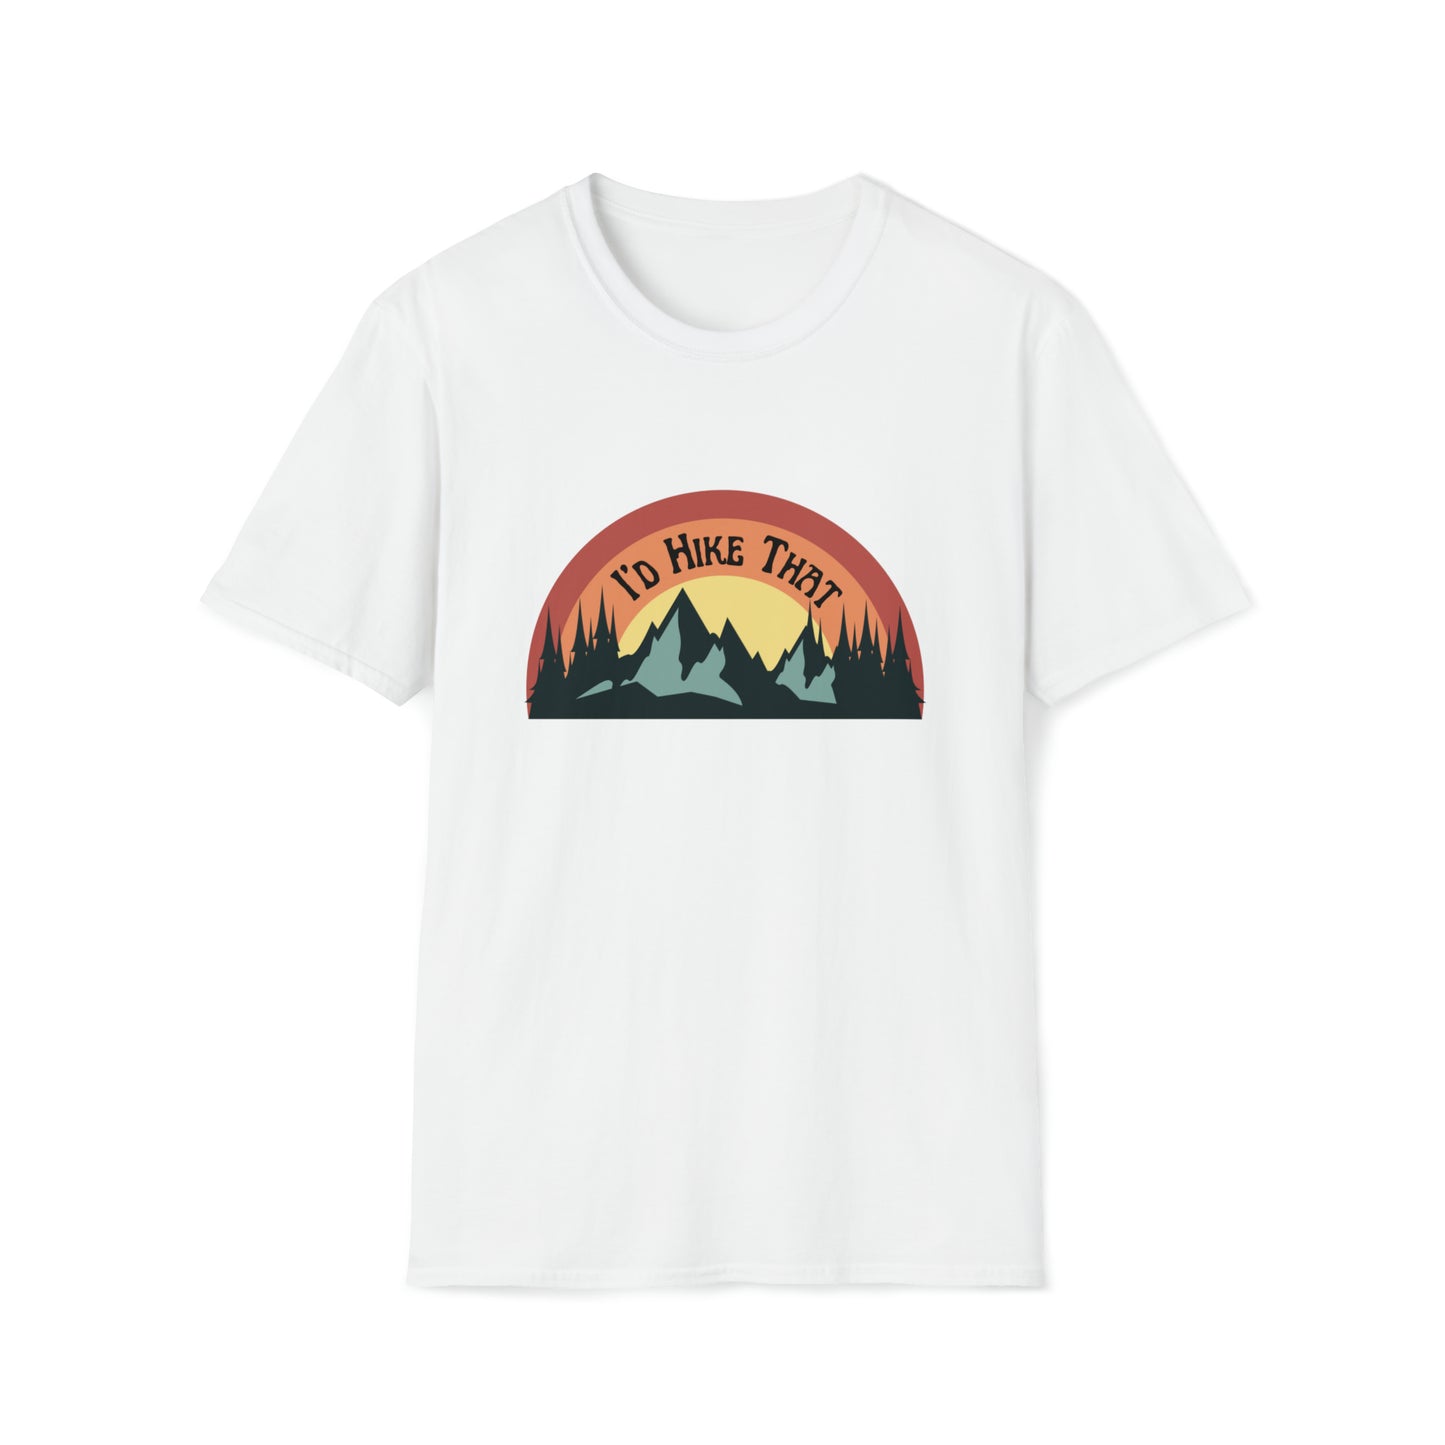 Unisex Softstyle T-Shirt, I'd Hike That Shirt, Adventure Shirt, Hiking Tee, Mountain Hiking Shirt, Camping Shirts, Hike More Worry Less Shirt